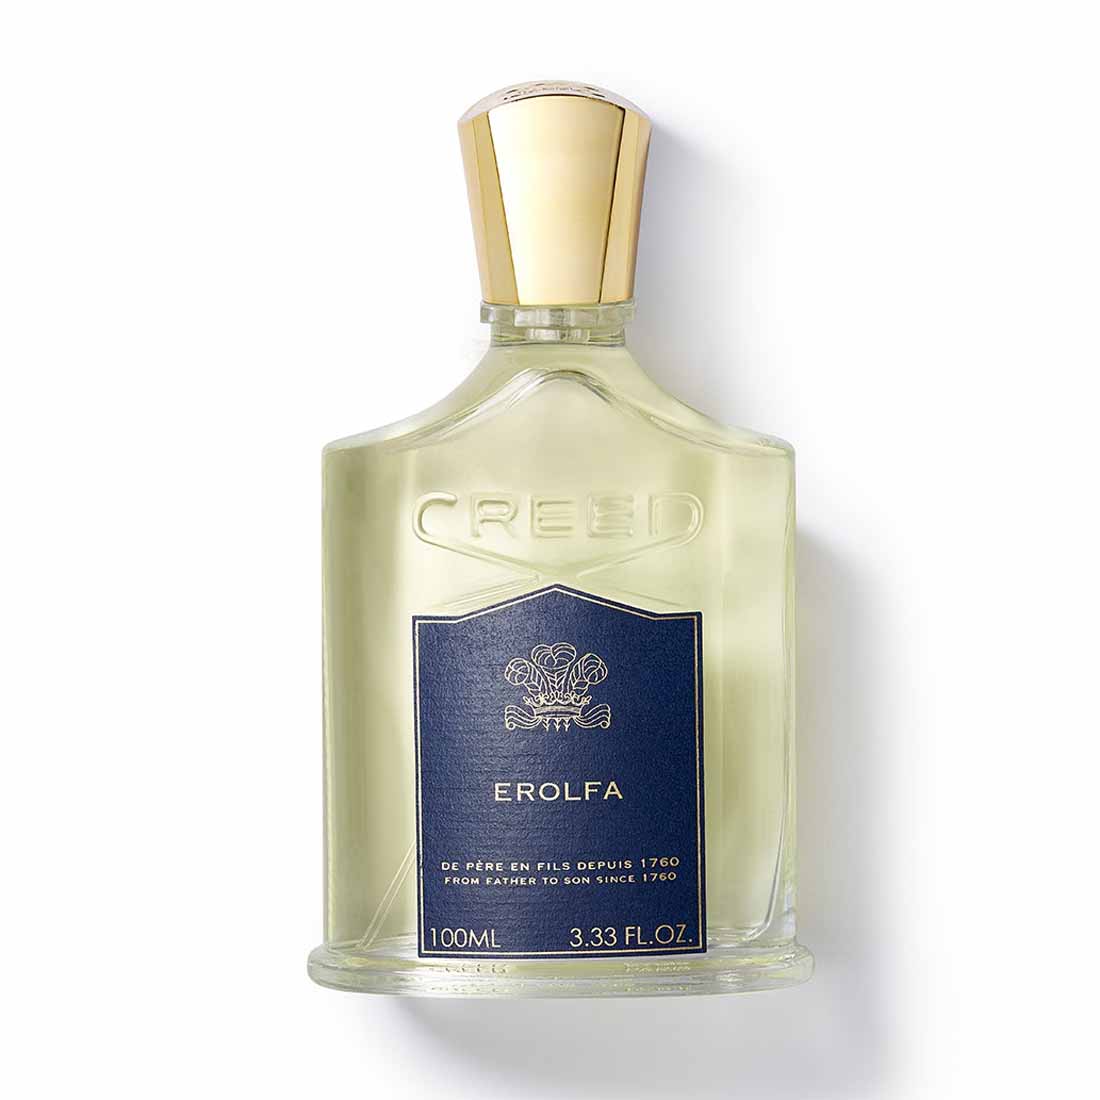 Creed Erolfa Eau De Parfum For Men